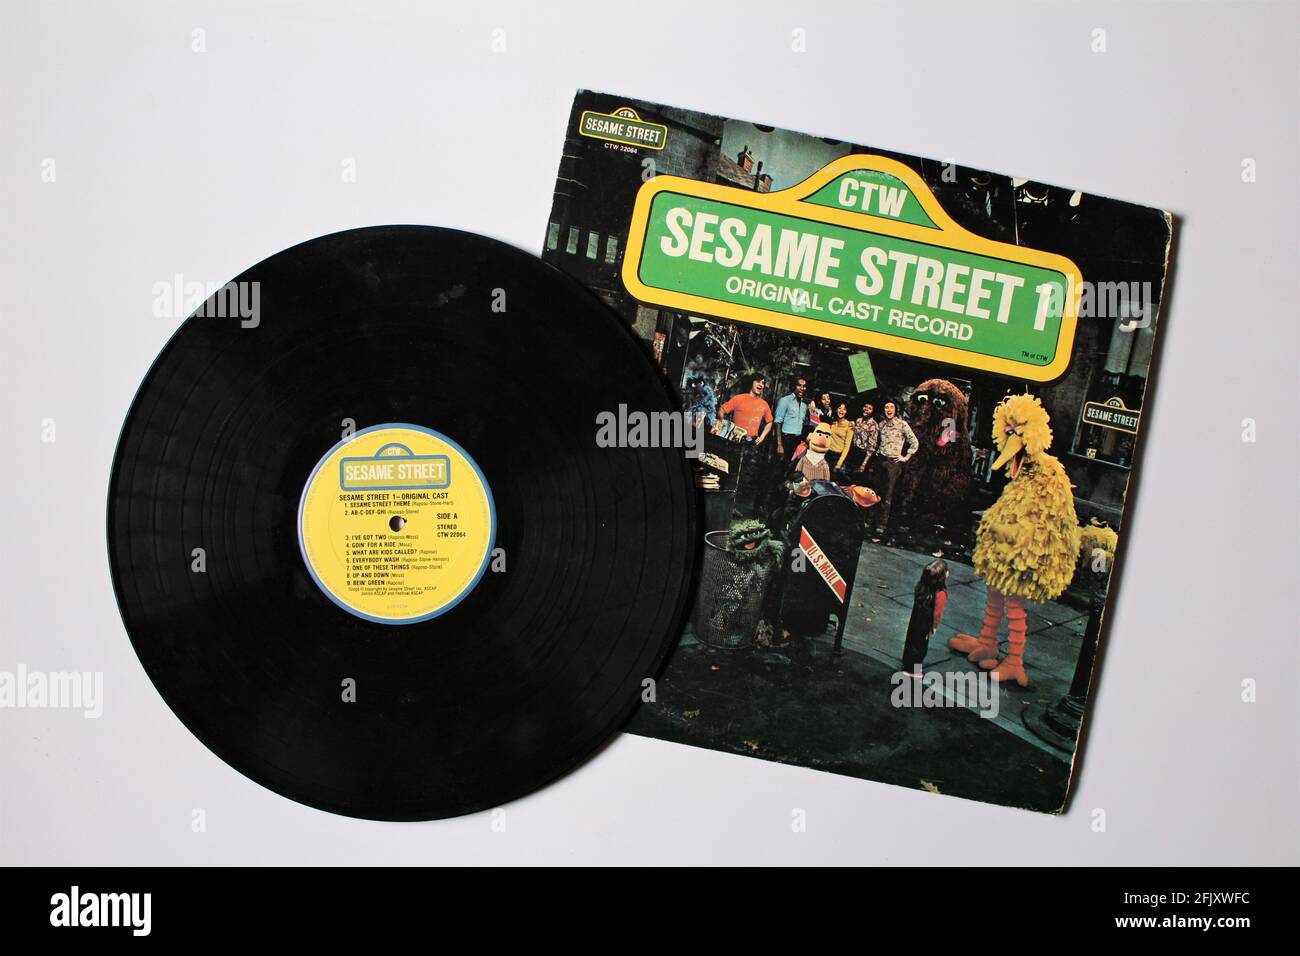 The Sesame Street Book Record: Original Cast from 1974. Album on vinyl record LP disc. Stock Photo